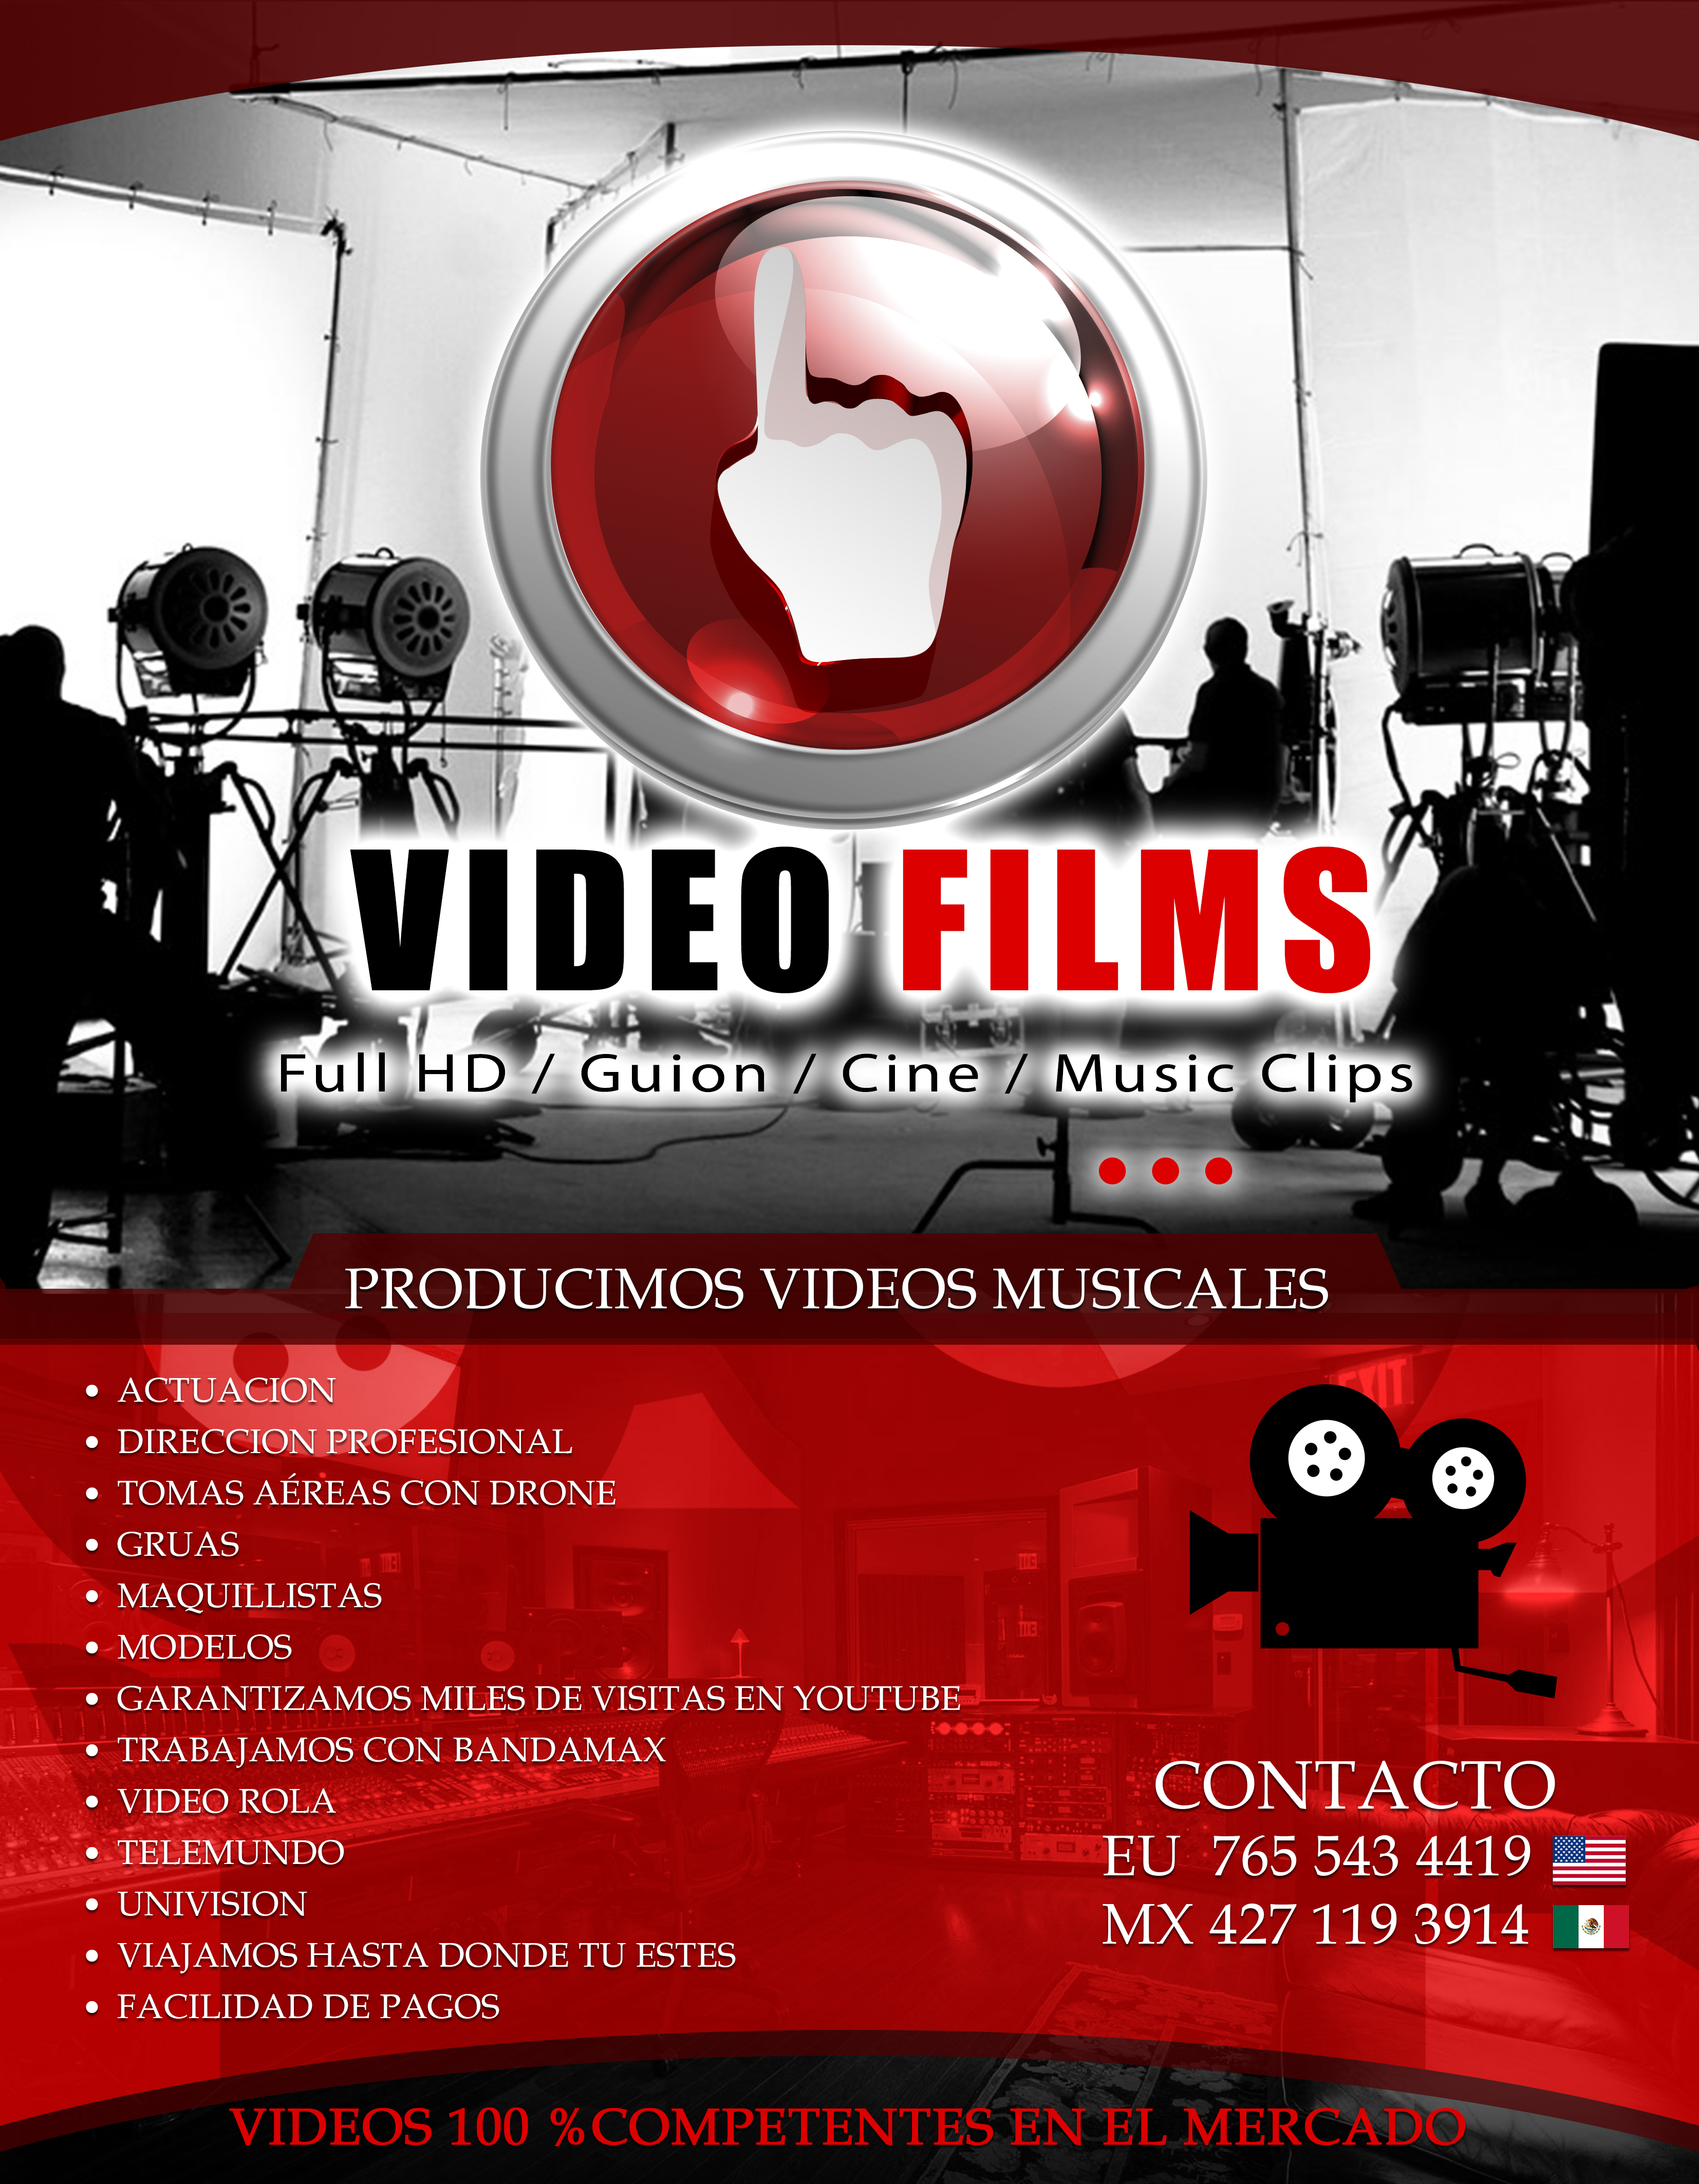 Video Films